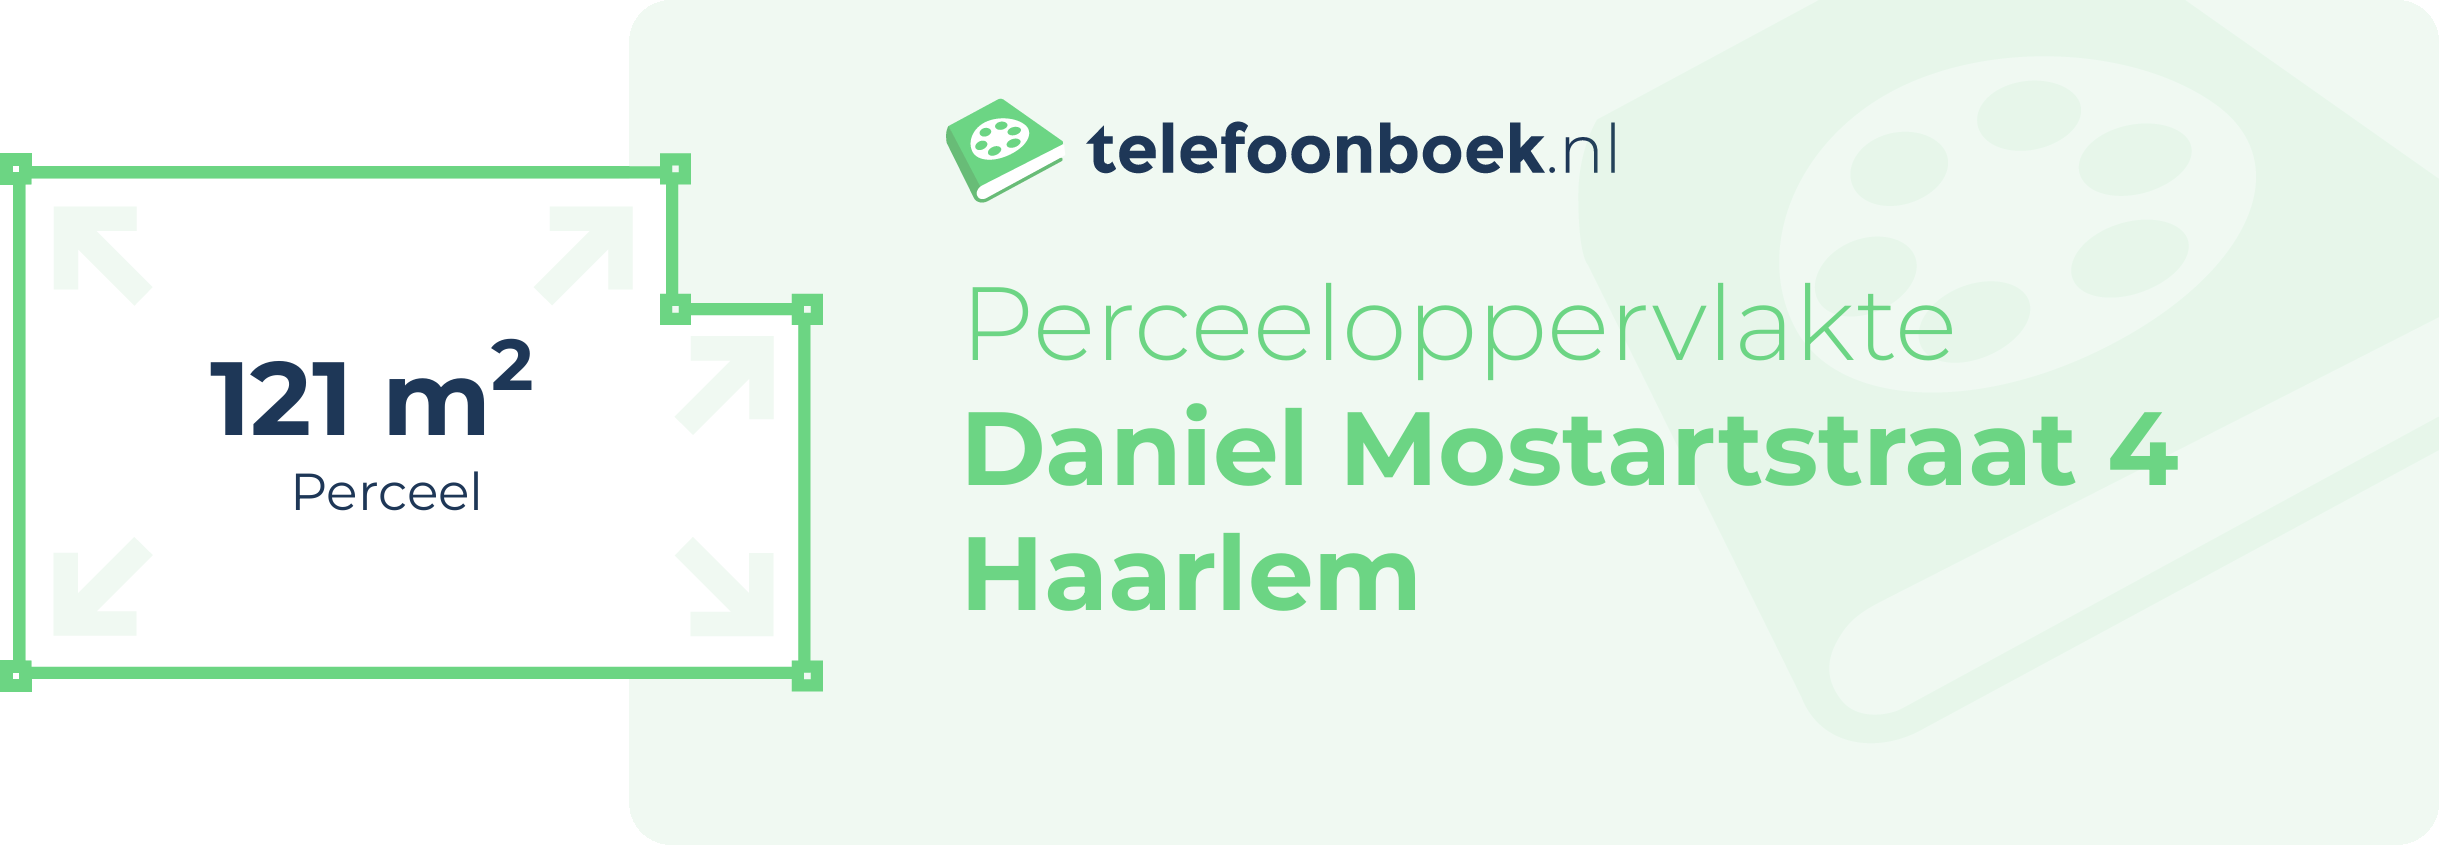 Perceeloppervlakte Daniel Mostartstraat 4 Haarlem